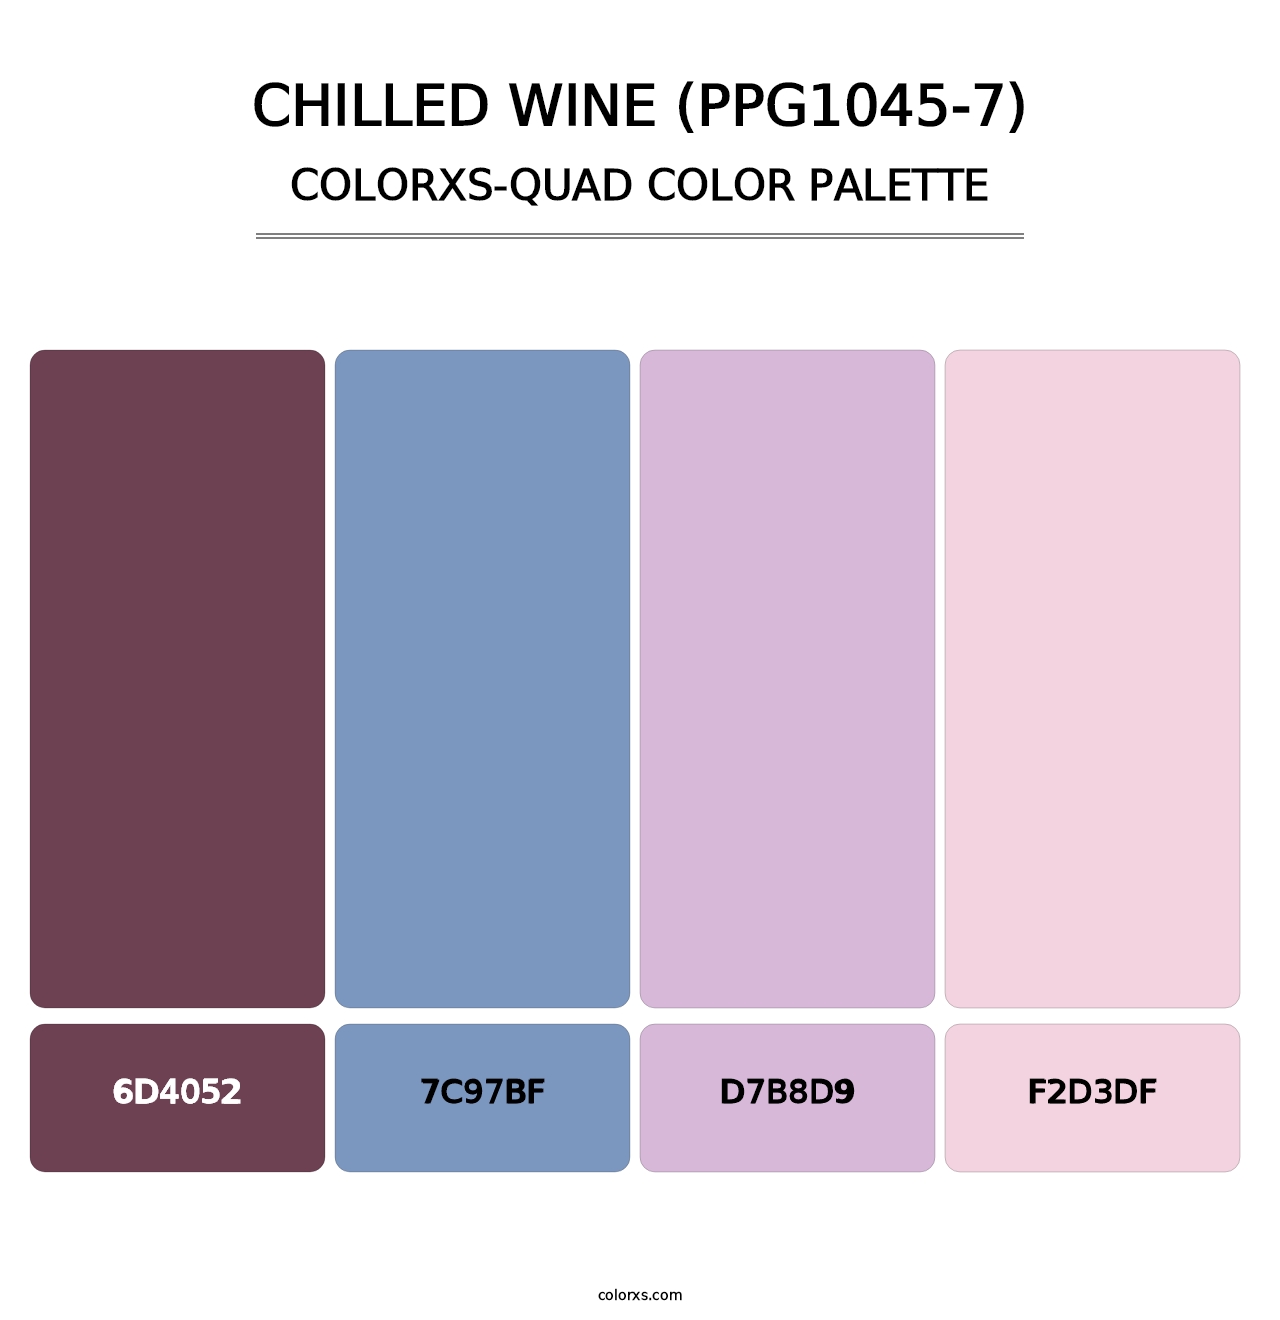 Chilled Wine (PPG1045-7) - Colorxs Quad Palette